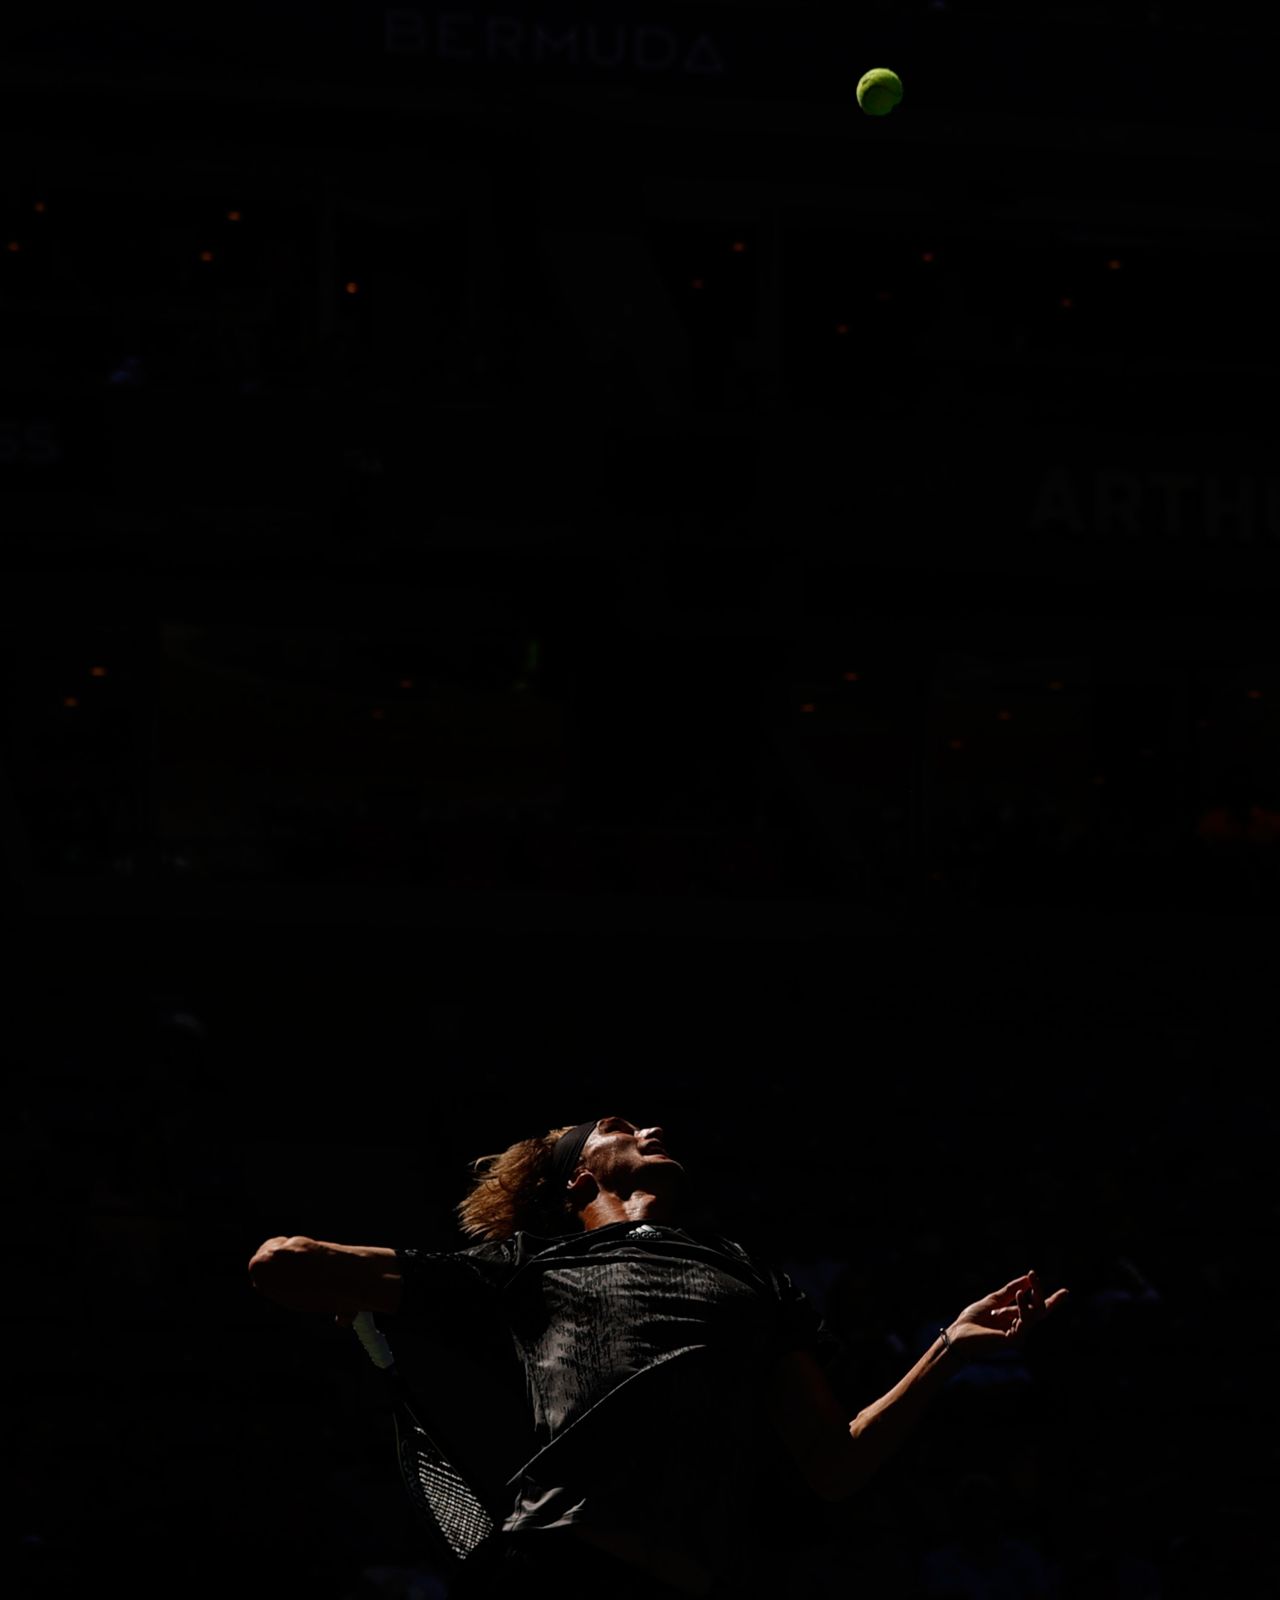 Alexander Zverev serves the ball to Albert Ramos-Vinolas during their second-round match at the US Open on Thursday, September 2. Zverev won in straight sets.